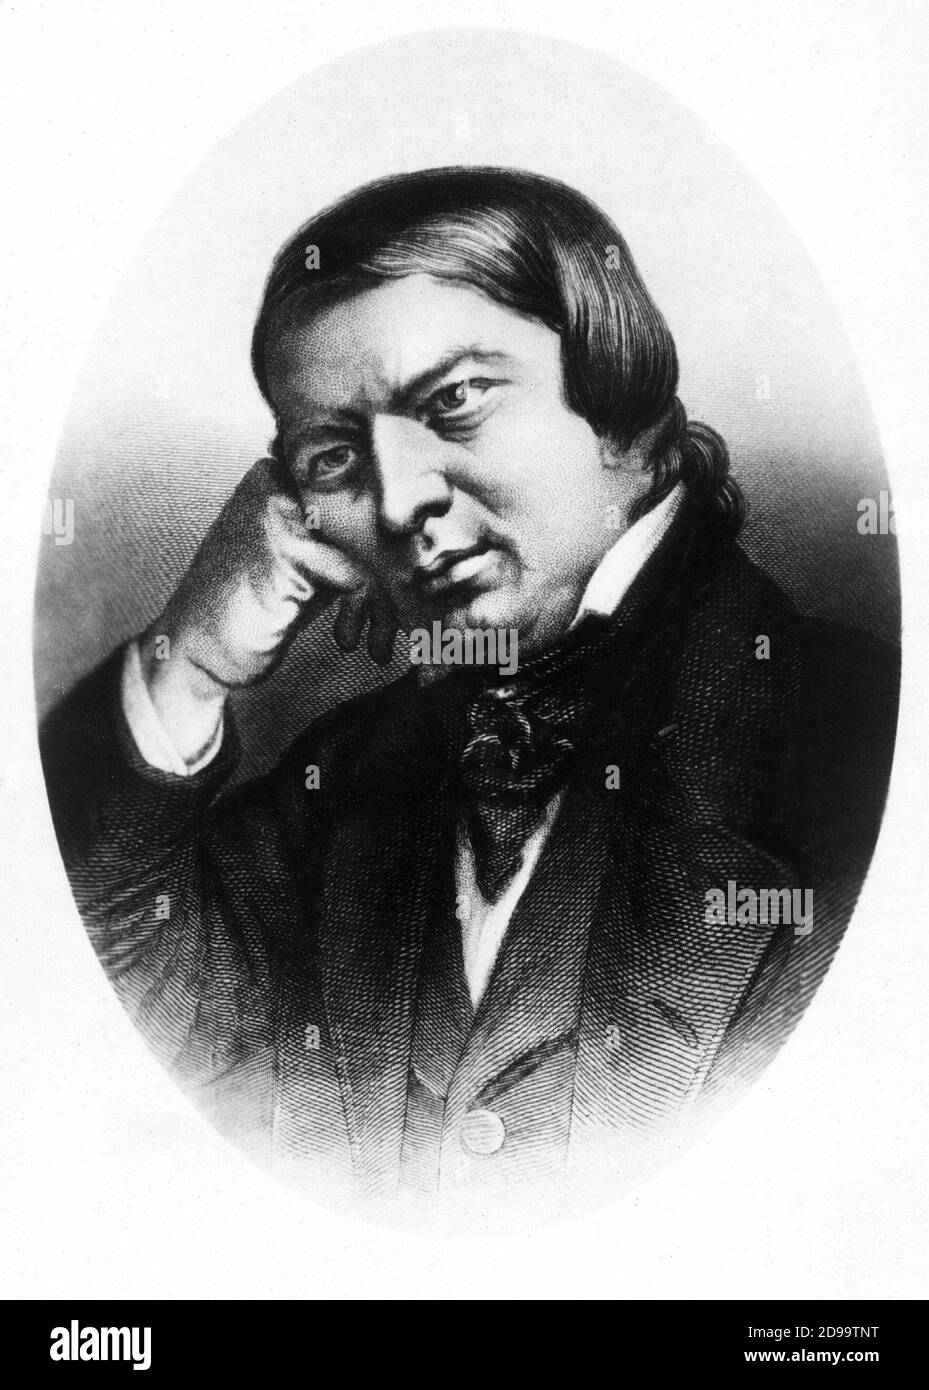 Le compositeur allemand de musique classique Robert SCHUMANN ( 1810 - 1856 ) - ROMANTICIMO - ROMANTISME - gravure de portrait - ritratto incisione - collet - colletto - cravatta - tie - MUSICA CLASSICA - COMPSIBORE - MUSICISTA --- Archivio GBB Banque D'Images